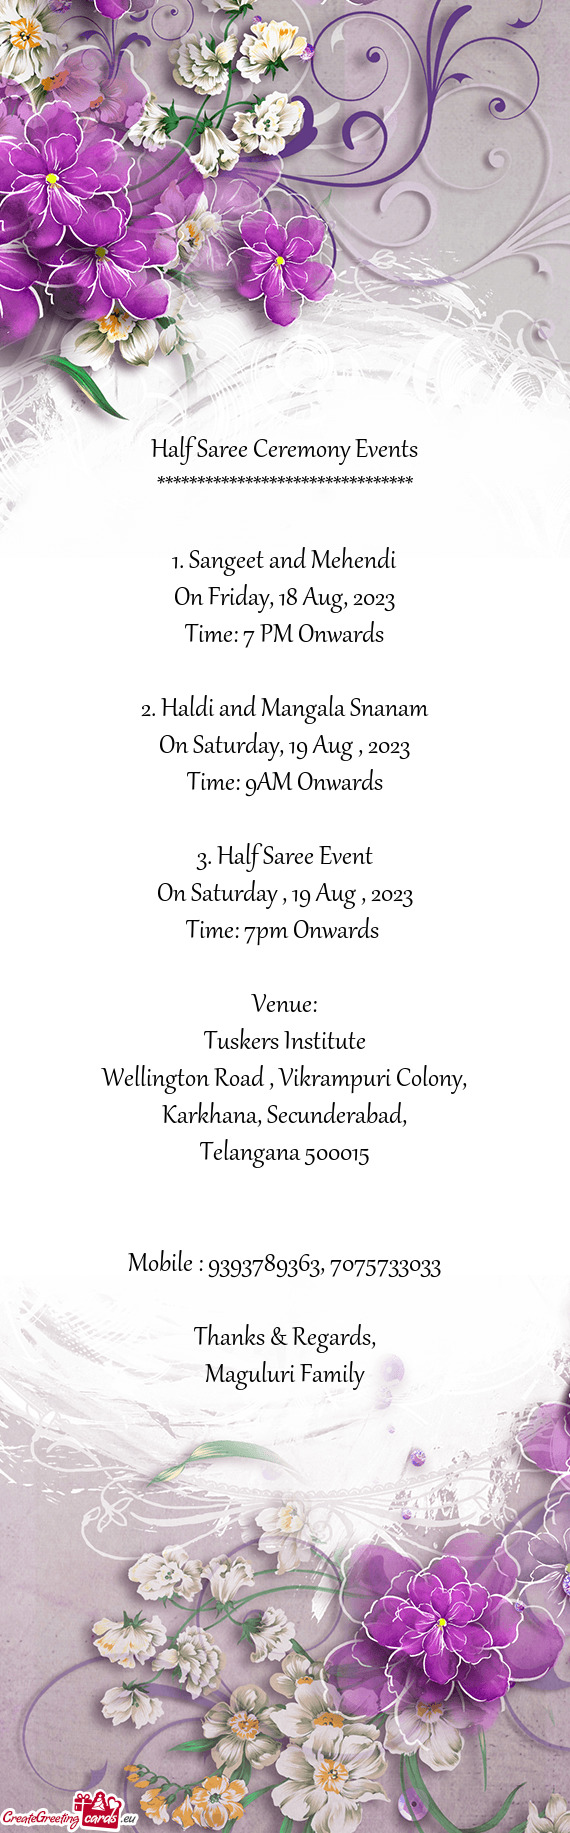 Half Saree Ceremony Events